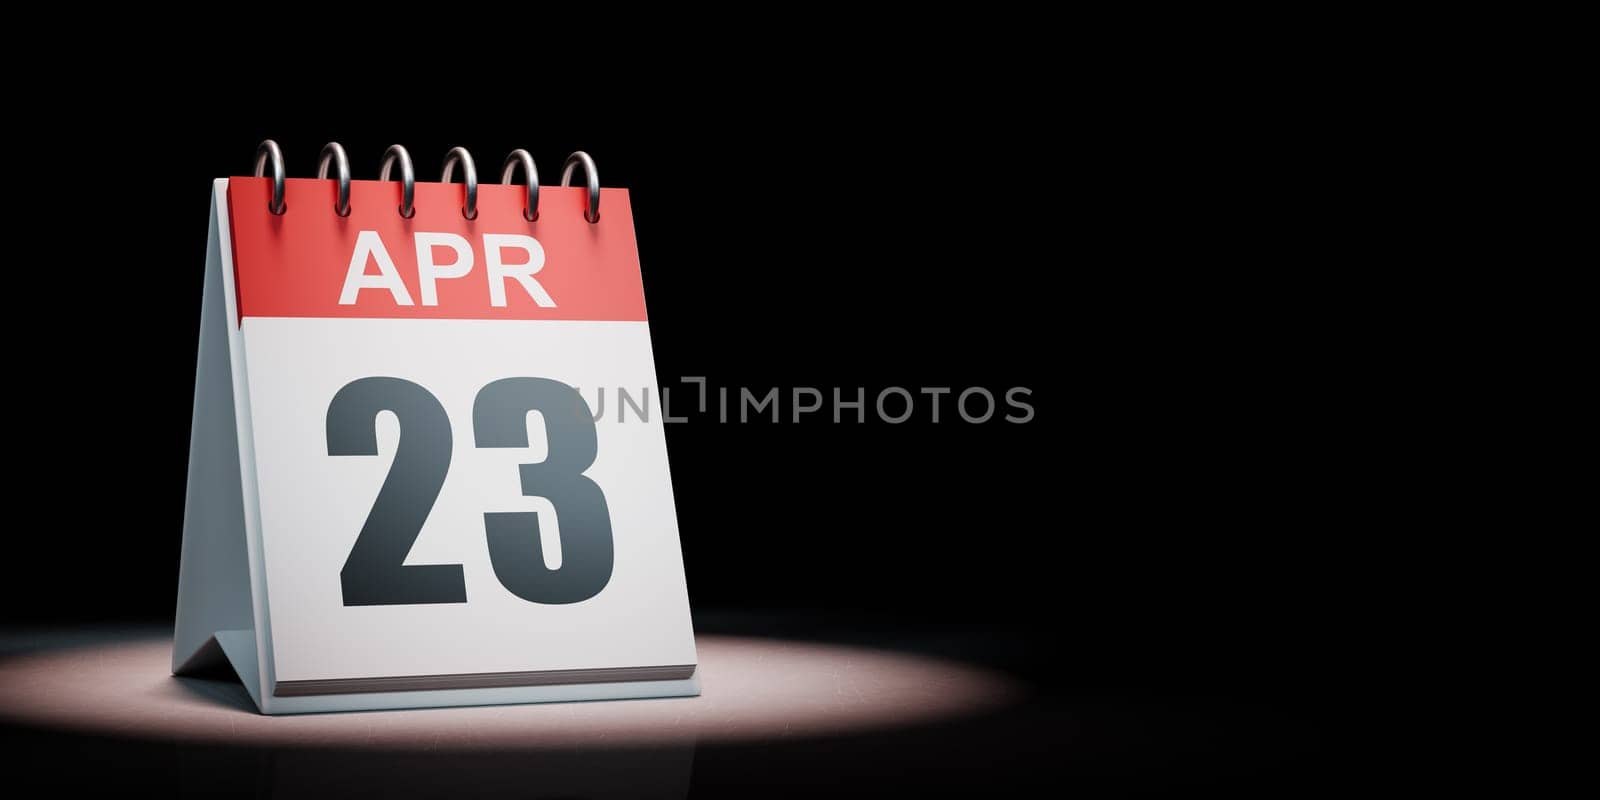 April 23 Calendar Spotlighted on Black Background by make